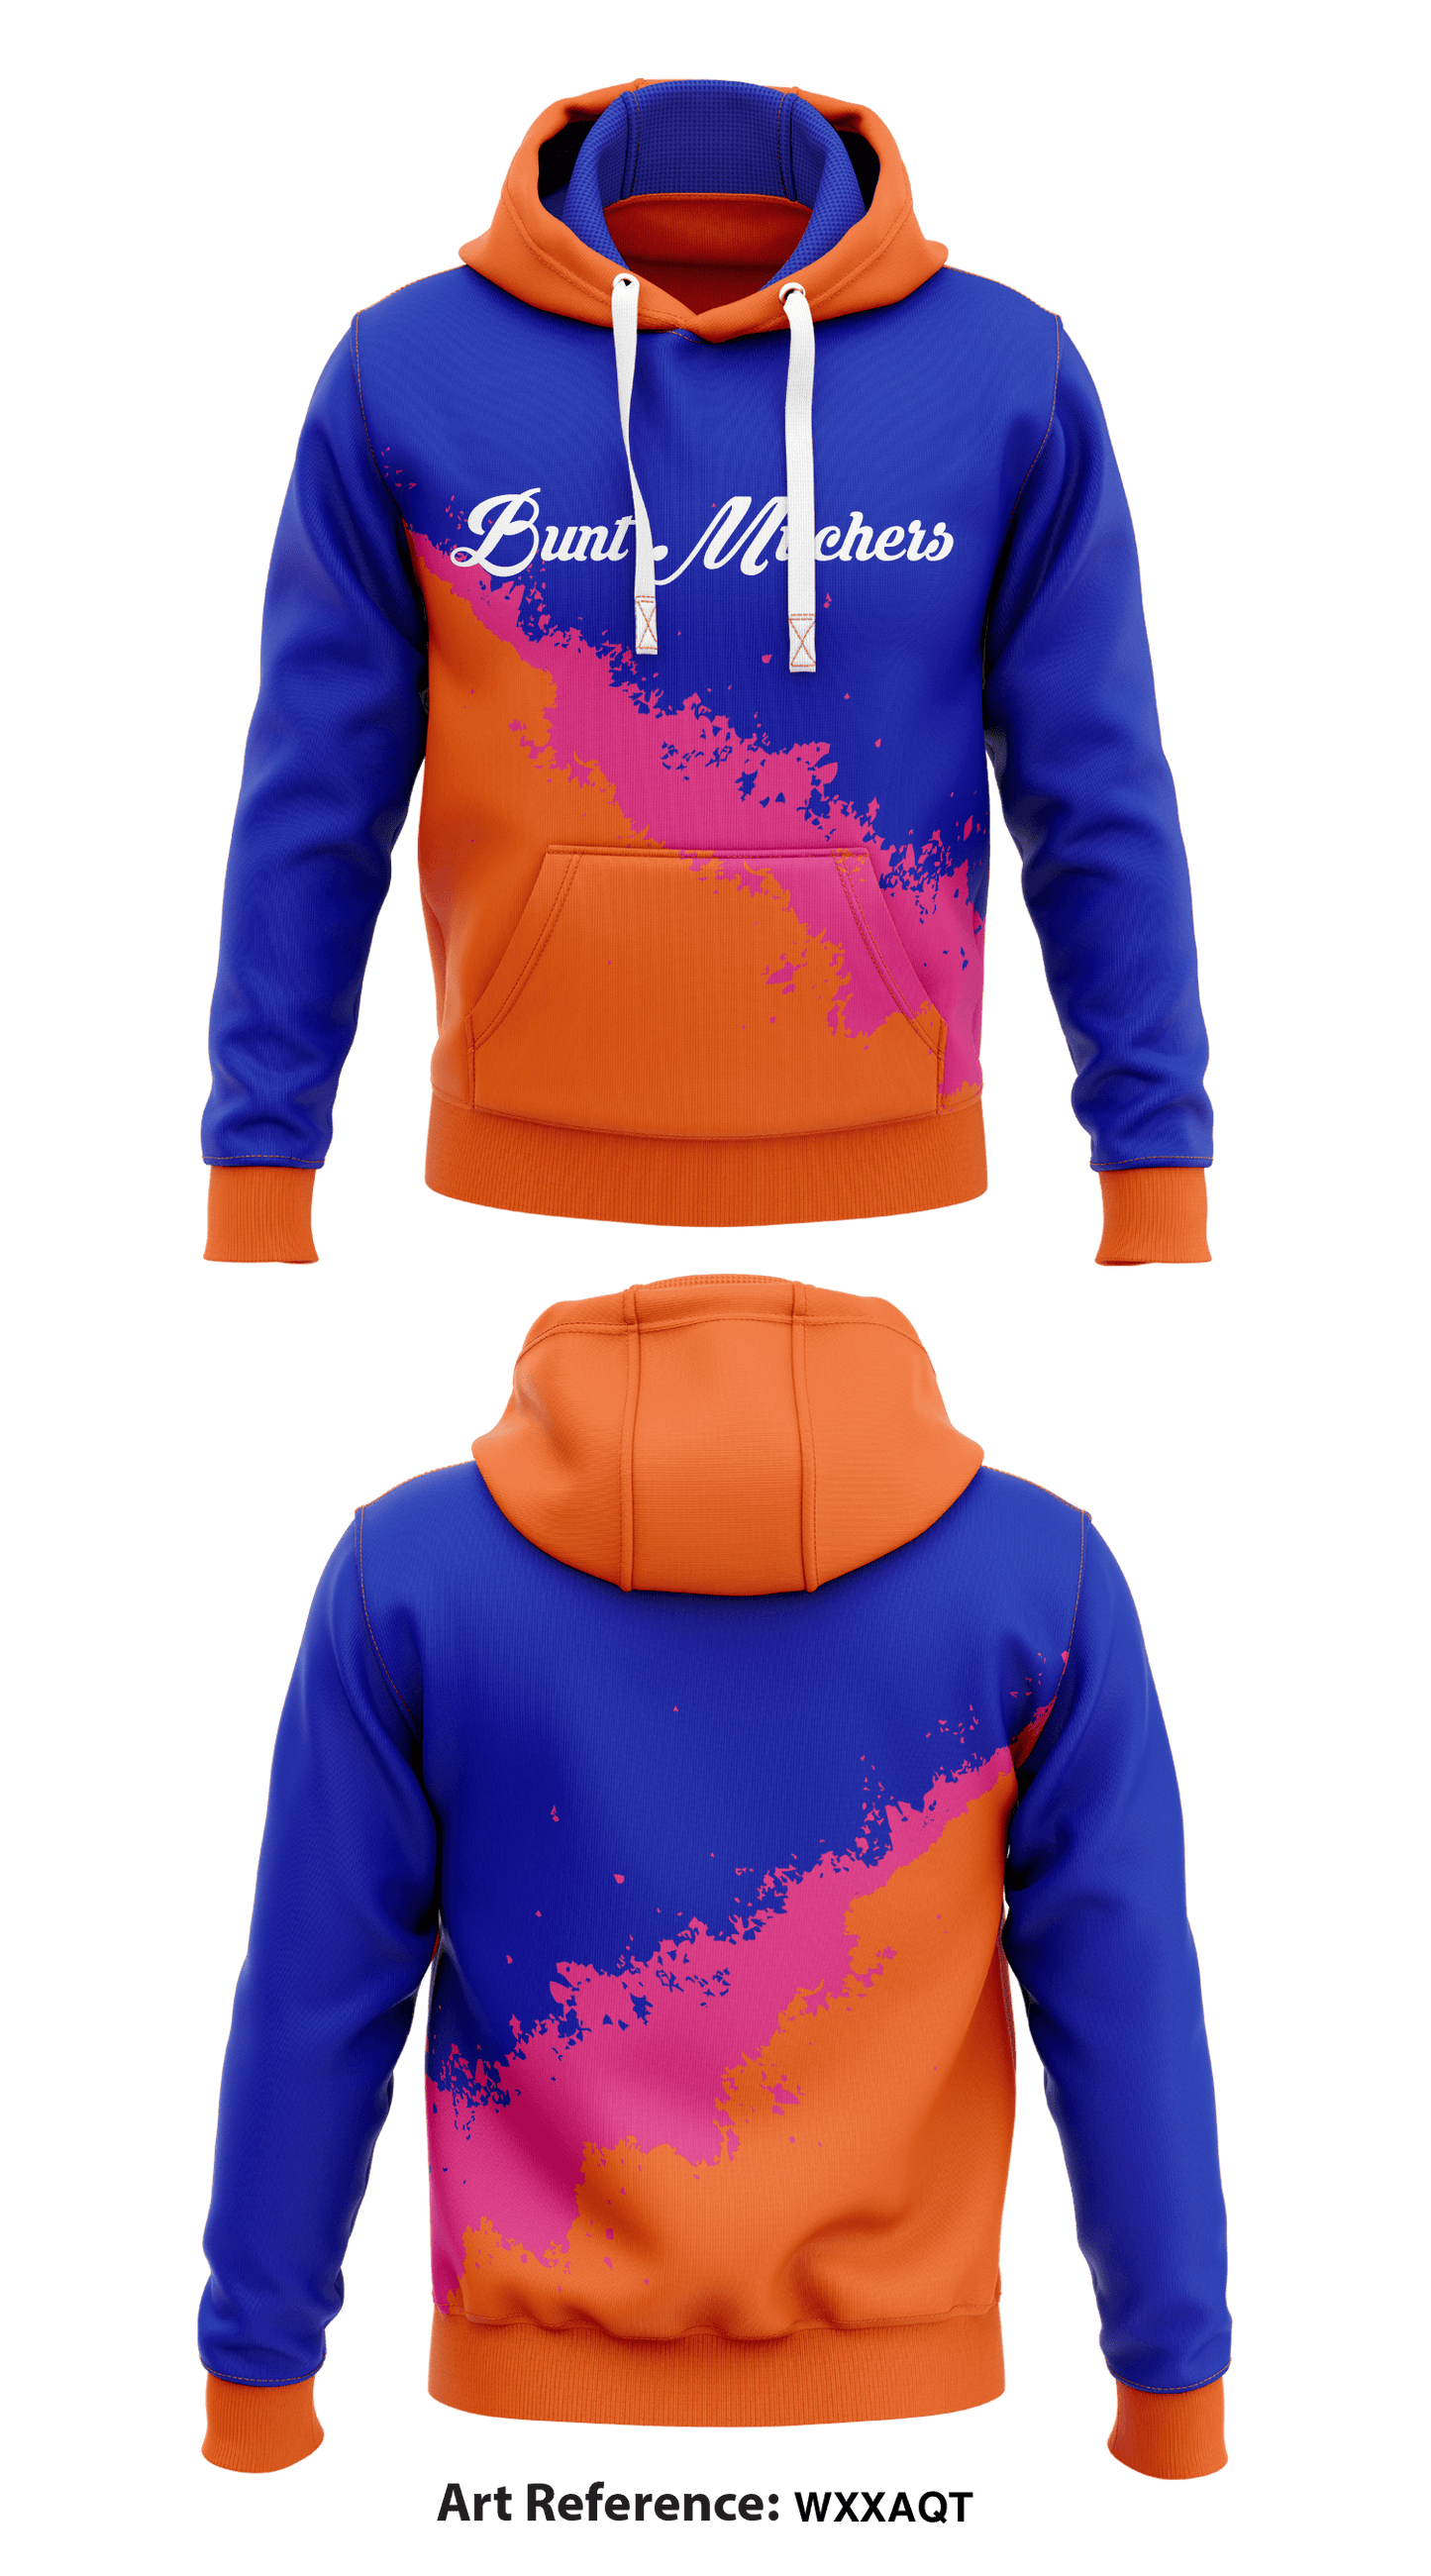 Bunt Muchers Store 1 Core Men's Hooded Performance Sweatshirt - WXXAQT